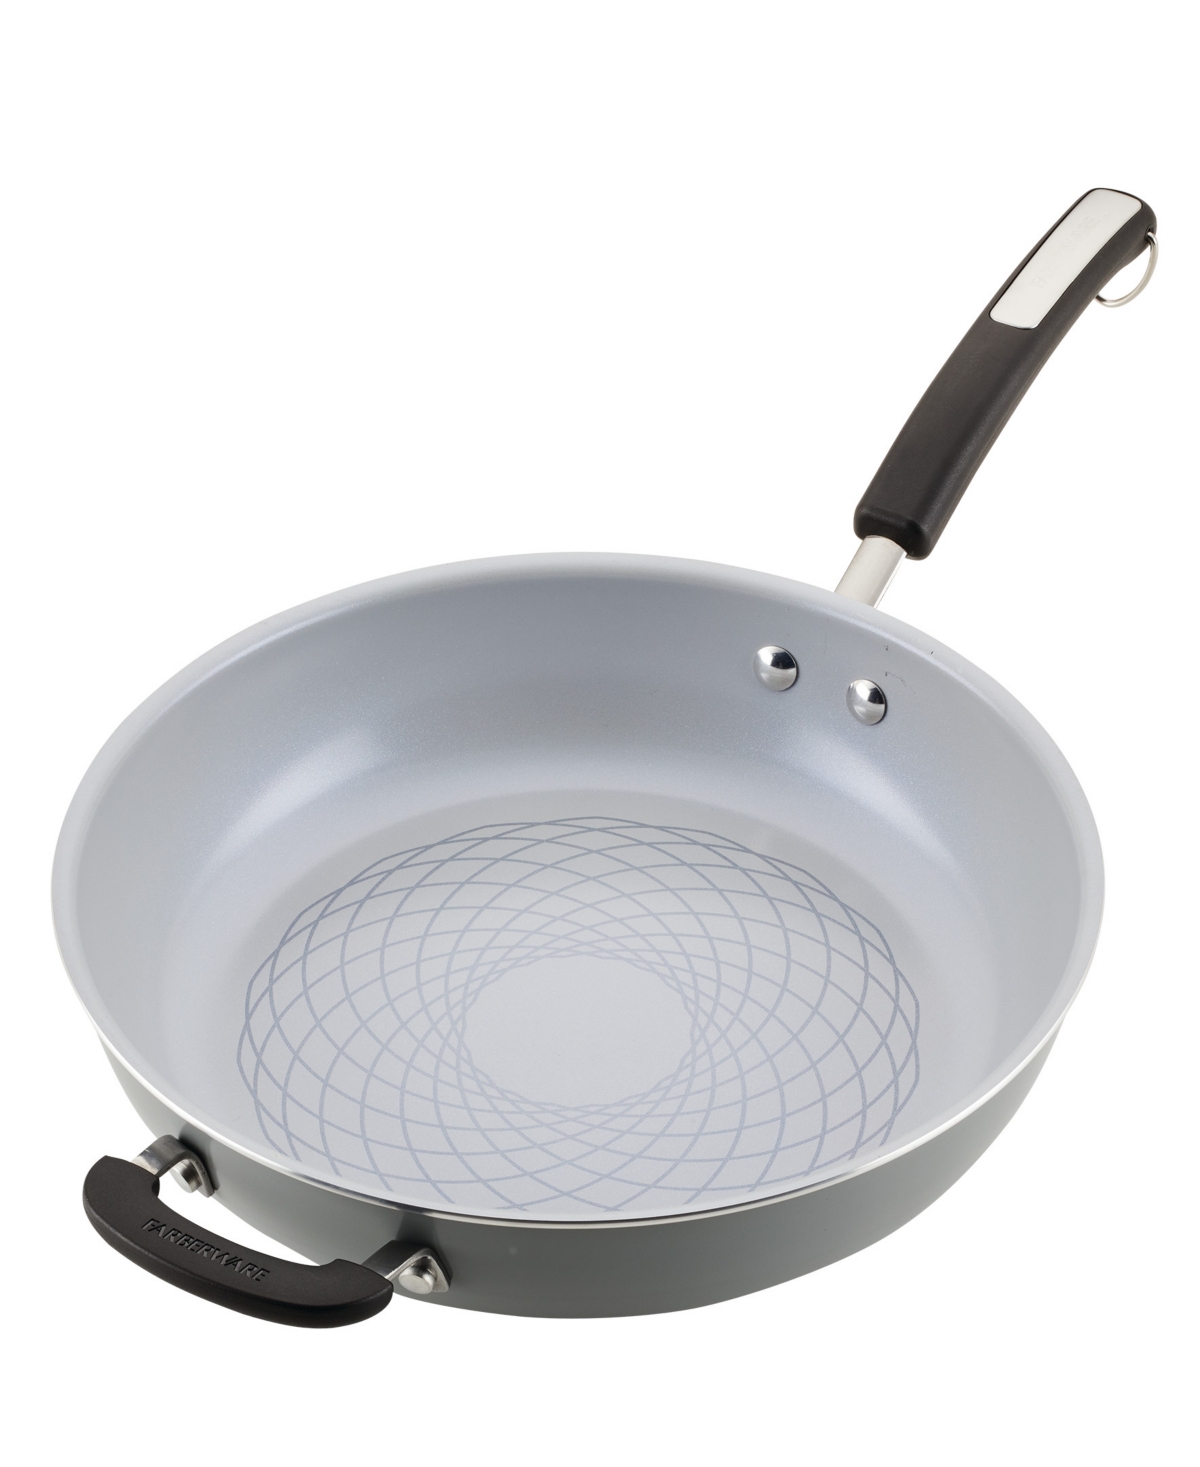 Farberware Eco Advantage Ceramic Nonstick 12.5-inch Deep Frying Pan In Gray